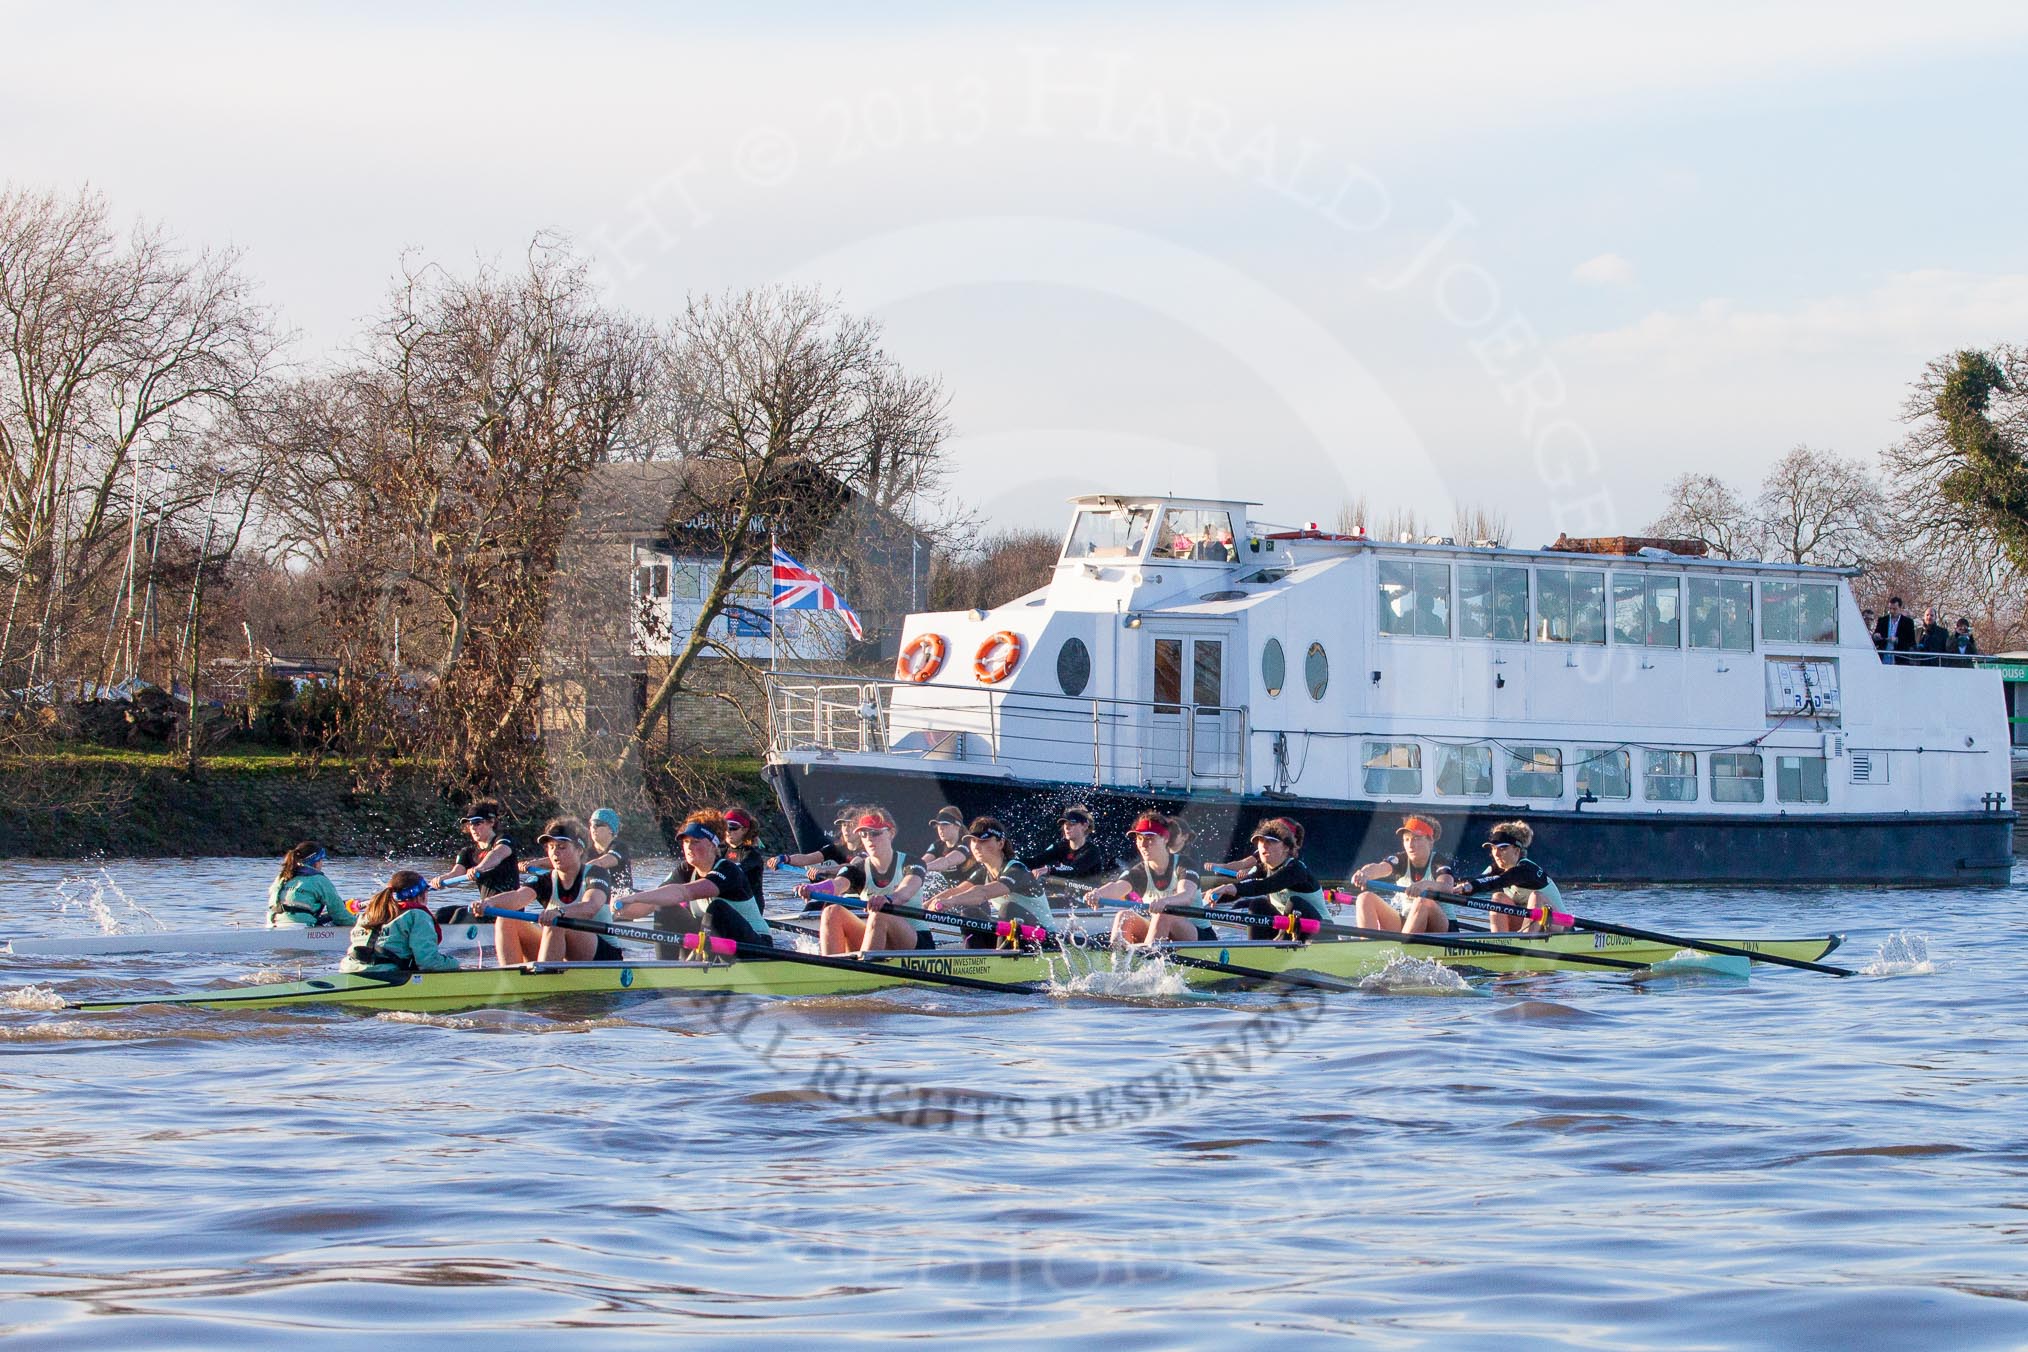 The Boat Race season 2014 - Women's Trial VIIIs(CUWBC, Cambridge): Nudge Nudge vs Wink Wink..
River Thames between Putney Bridge and Mortlake,
London SW15,

United Kingdom,
on 19 December 2013 at 14:04, image #357